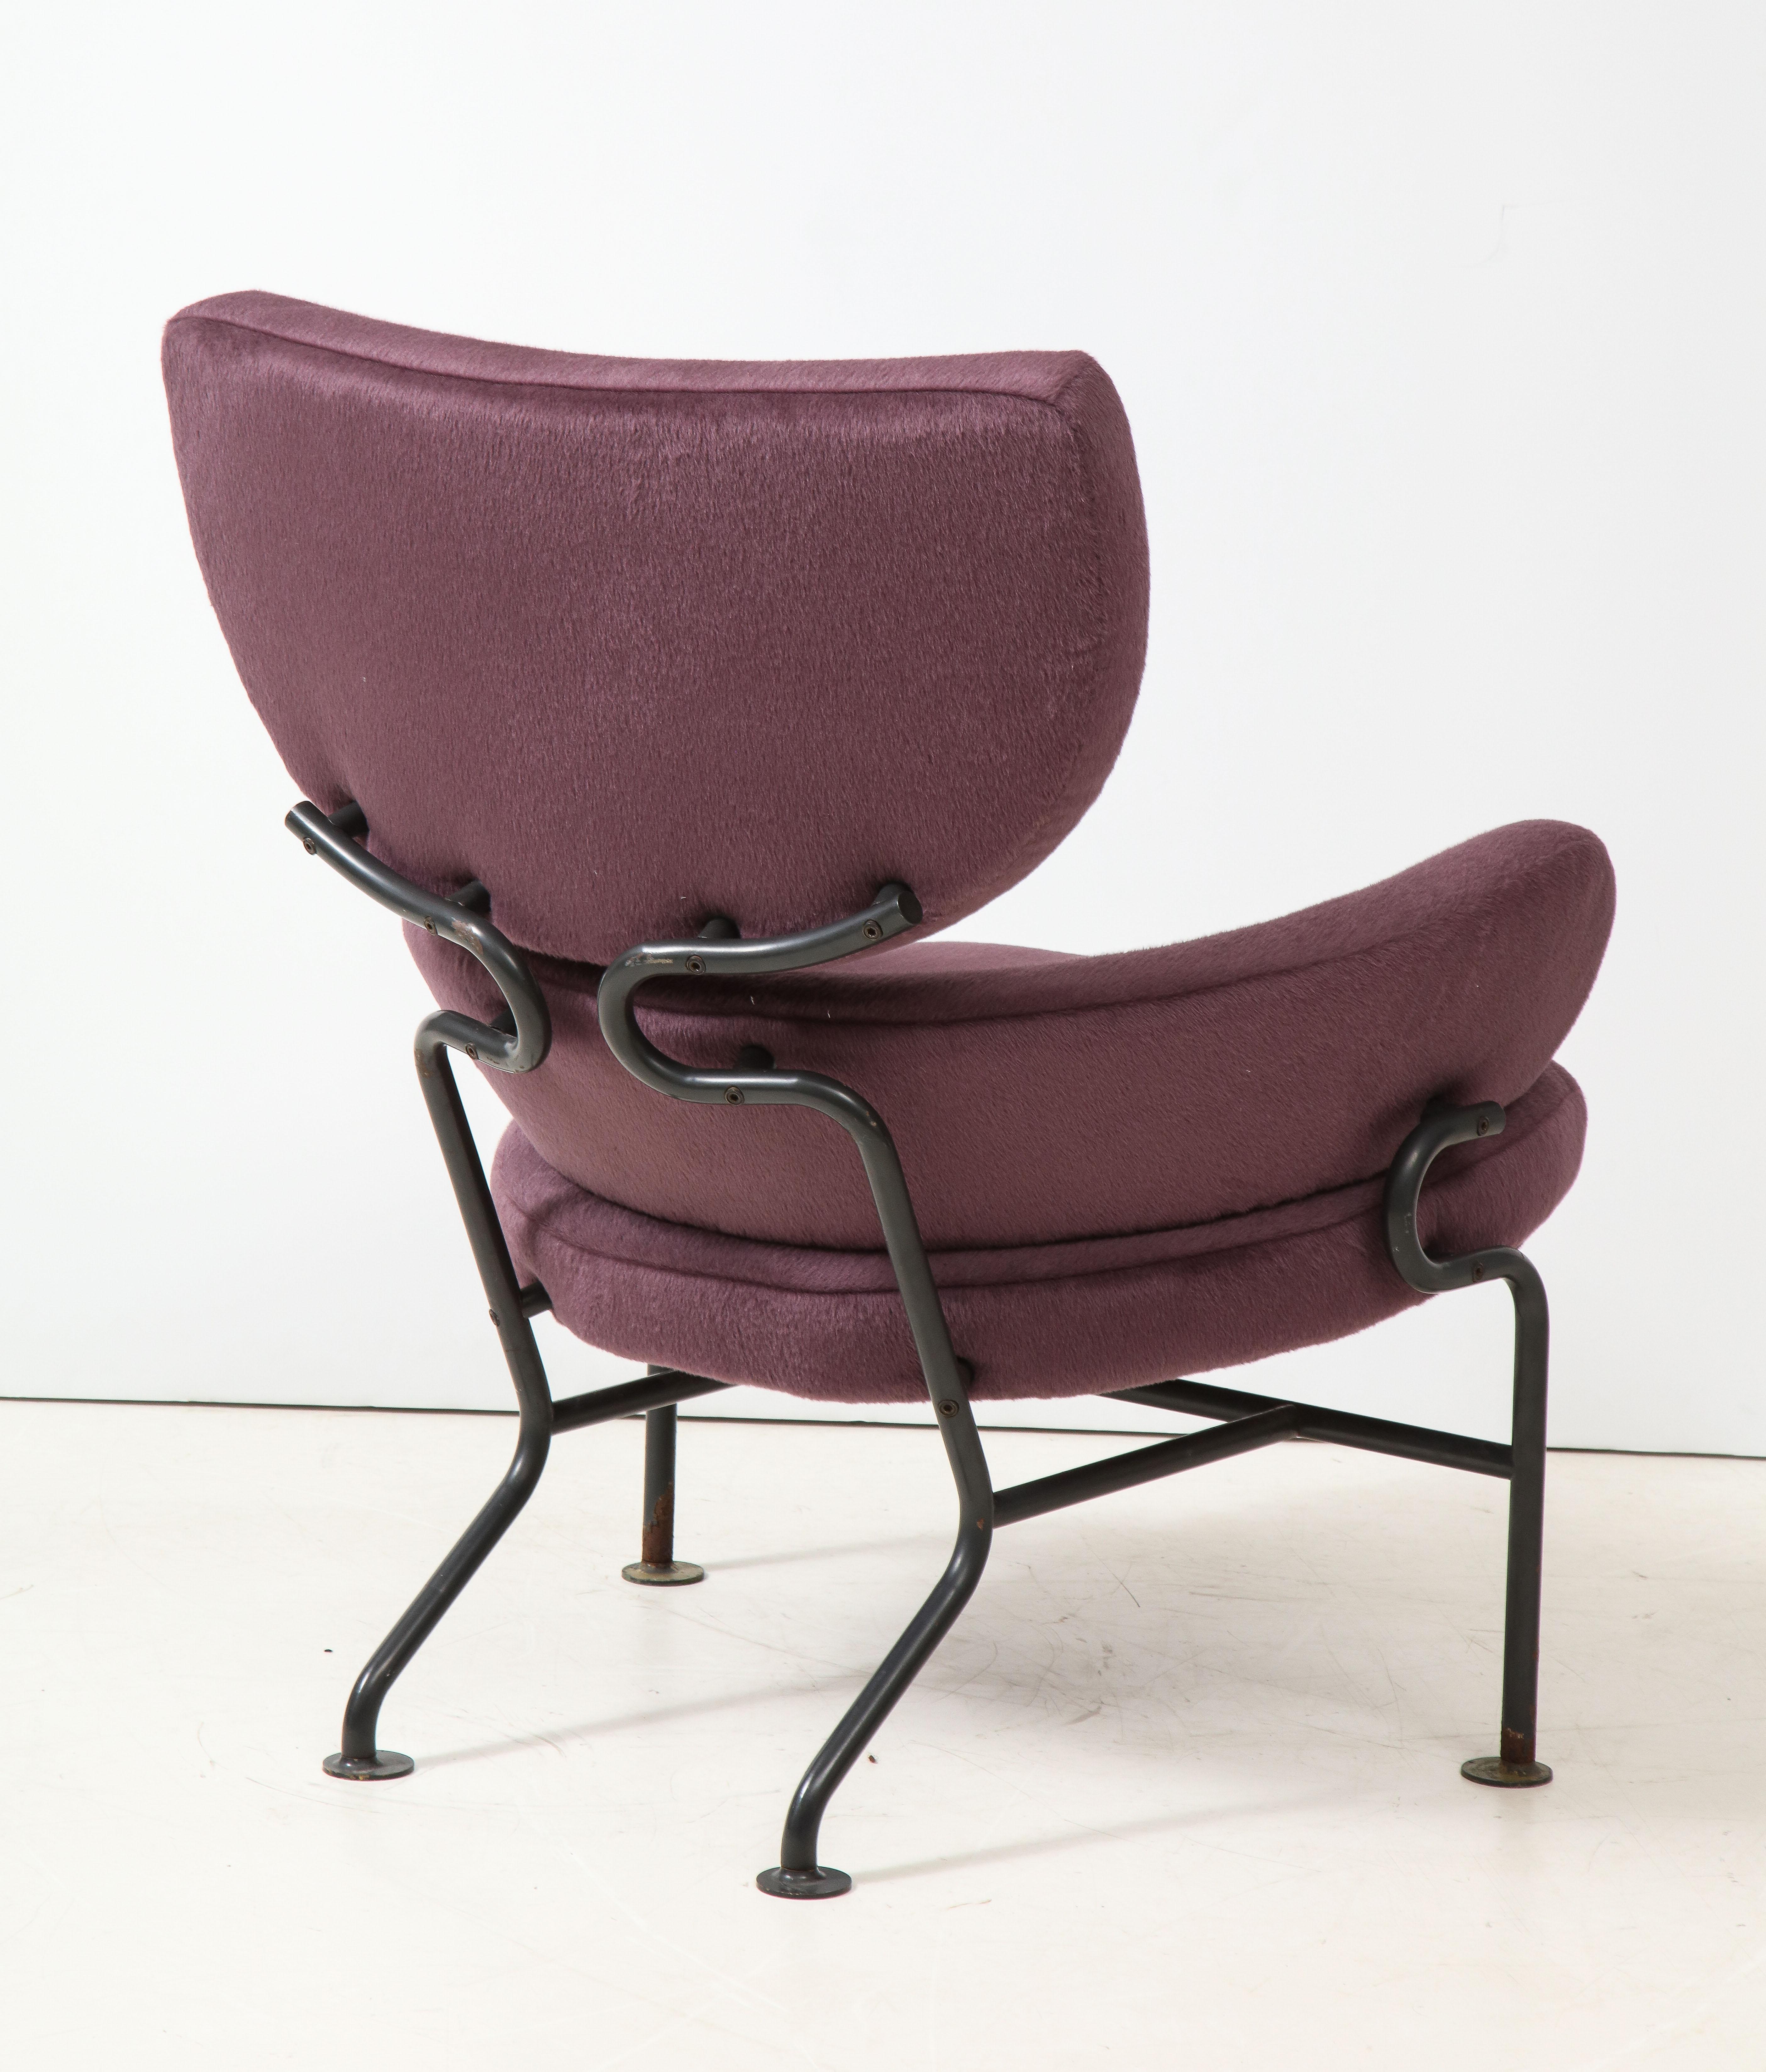 Metal Purple Alpaca Model Pl 19 Armchair by Franco Albini, Italy, c. 1959 For Sale